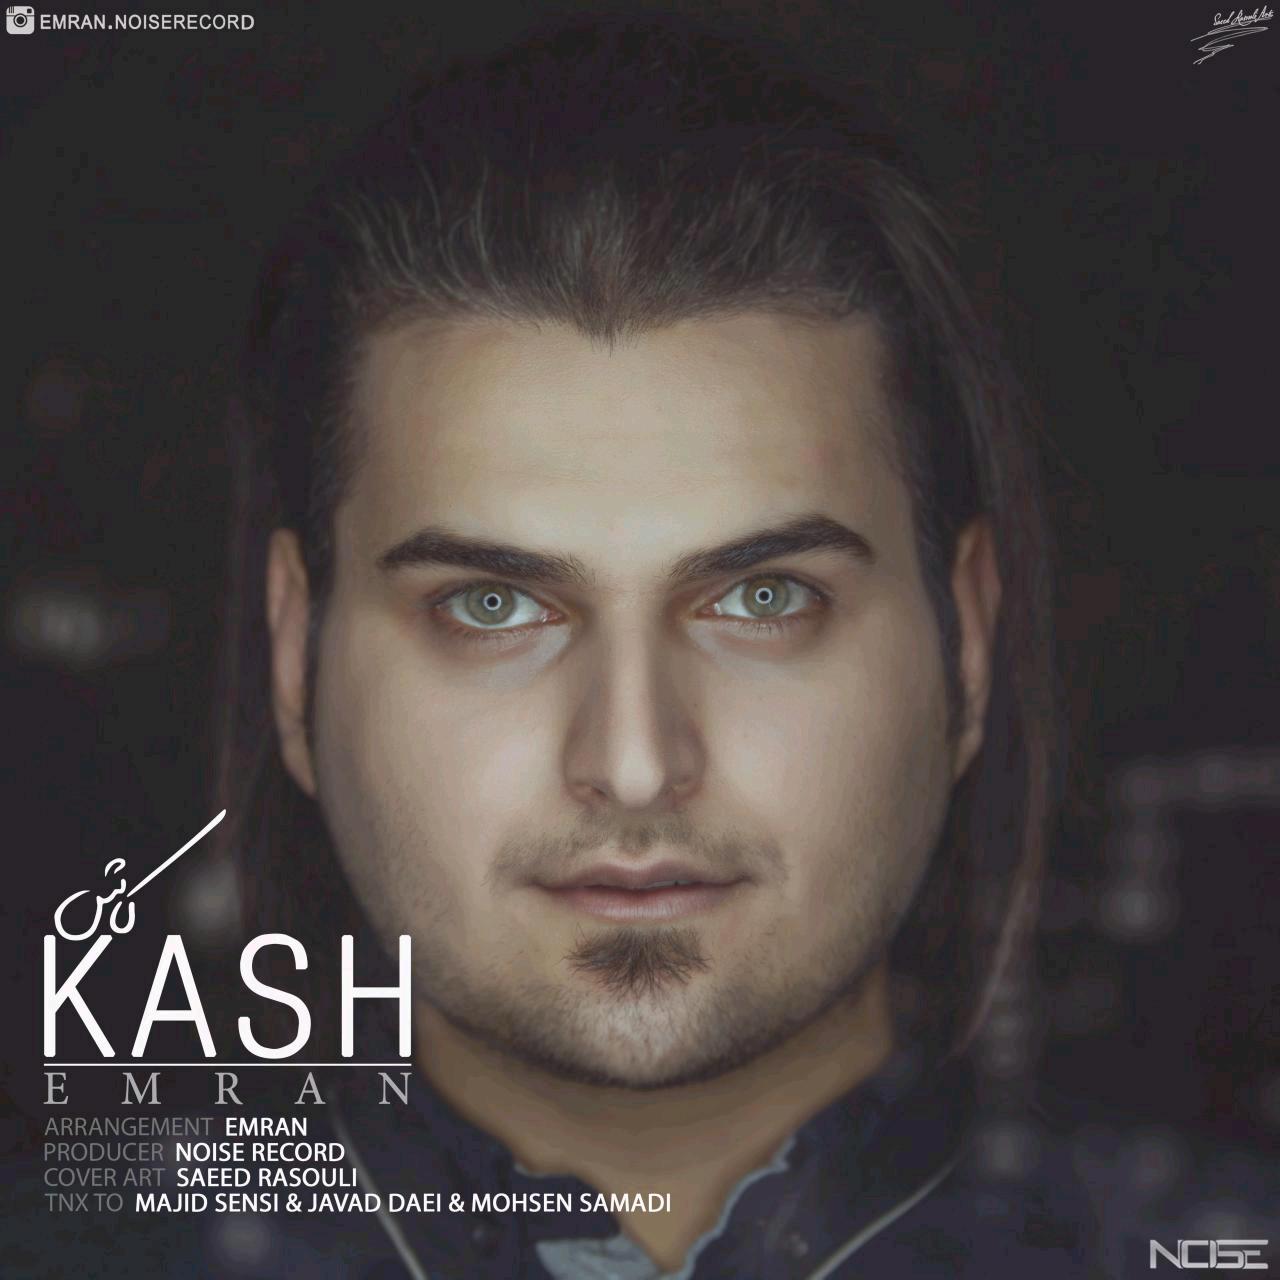  دانلود آهنگ جدید عمران - کاش | Download New Music By Emran - Kash